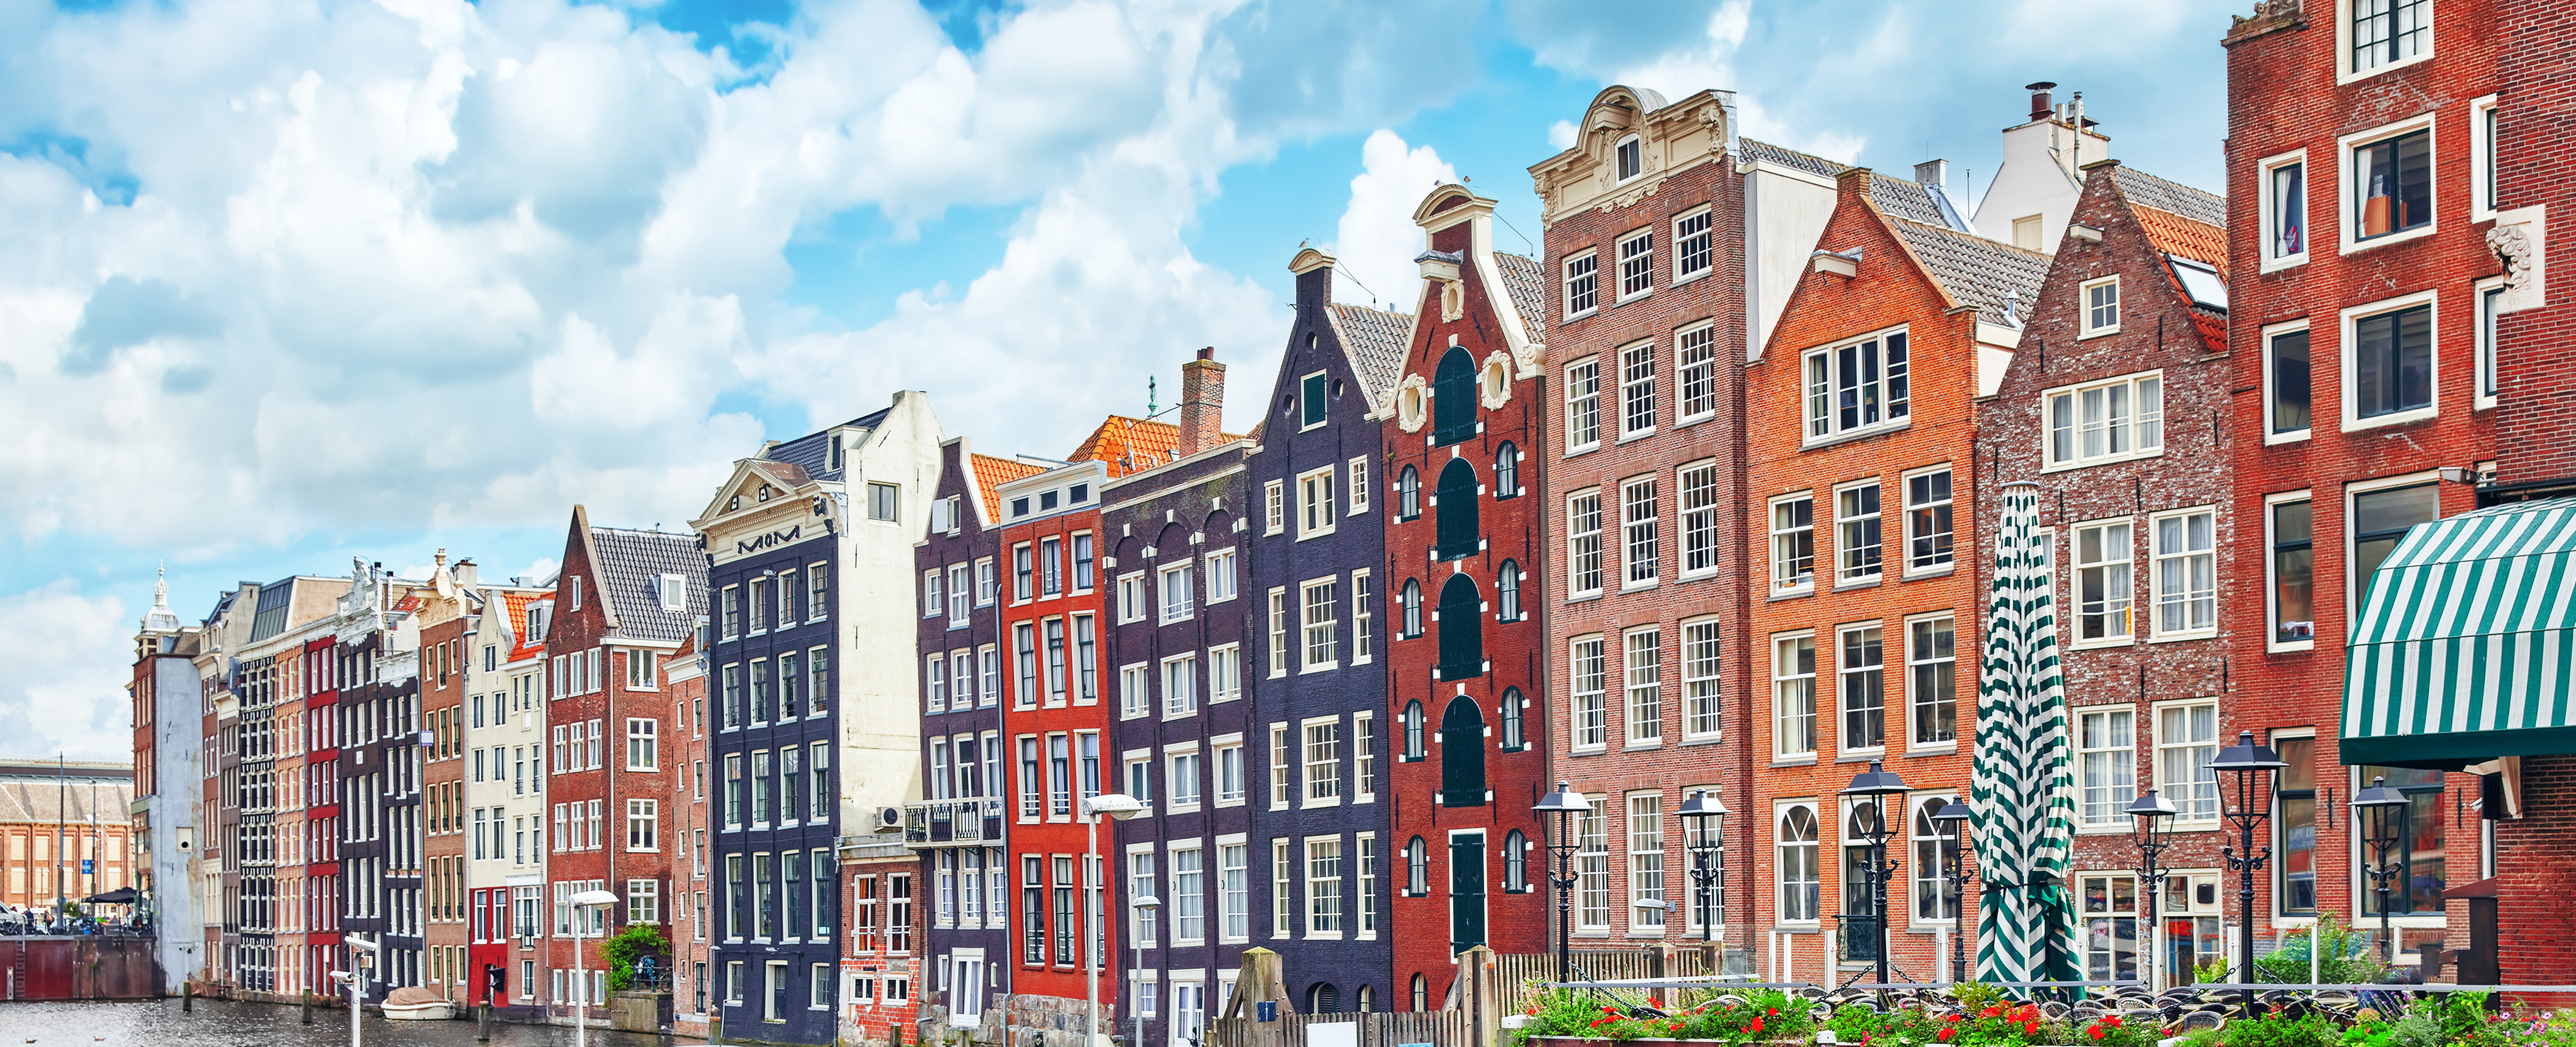 Amsterdam, City of Diamonds - Royal Coster Diamonds